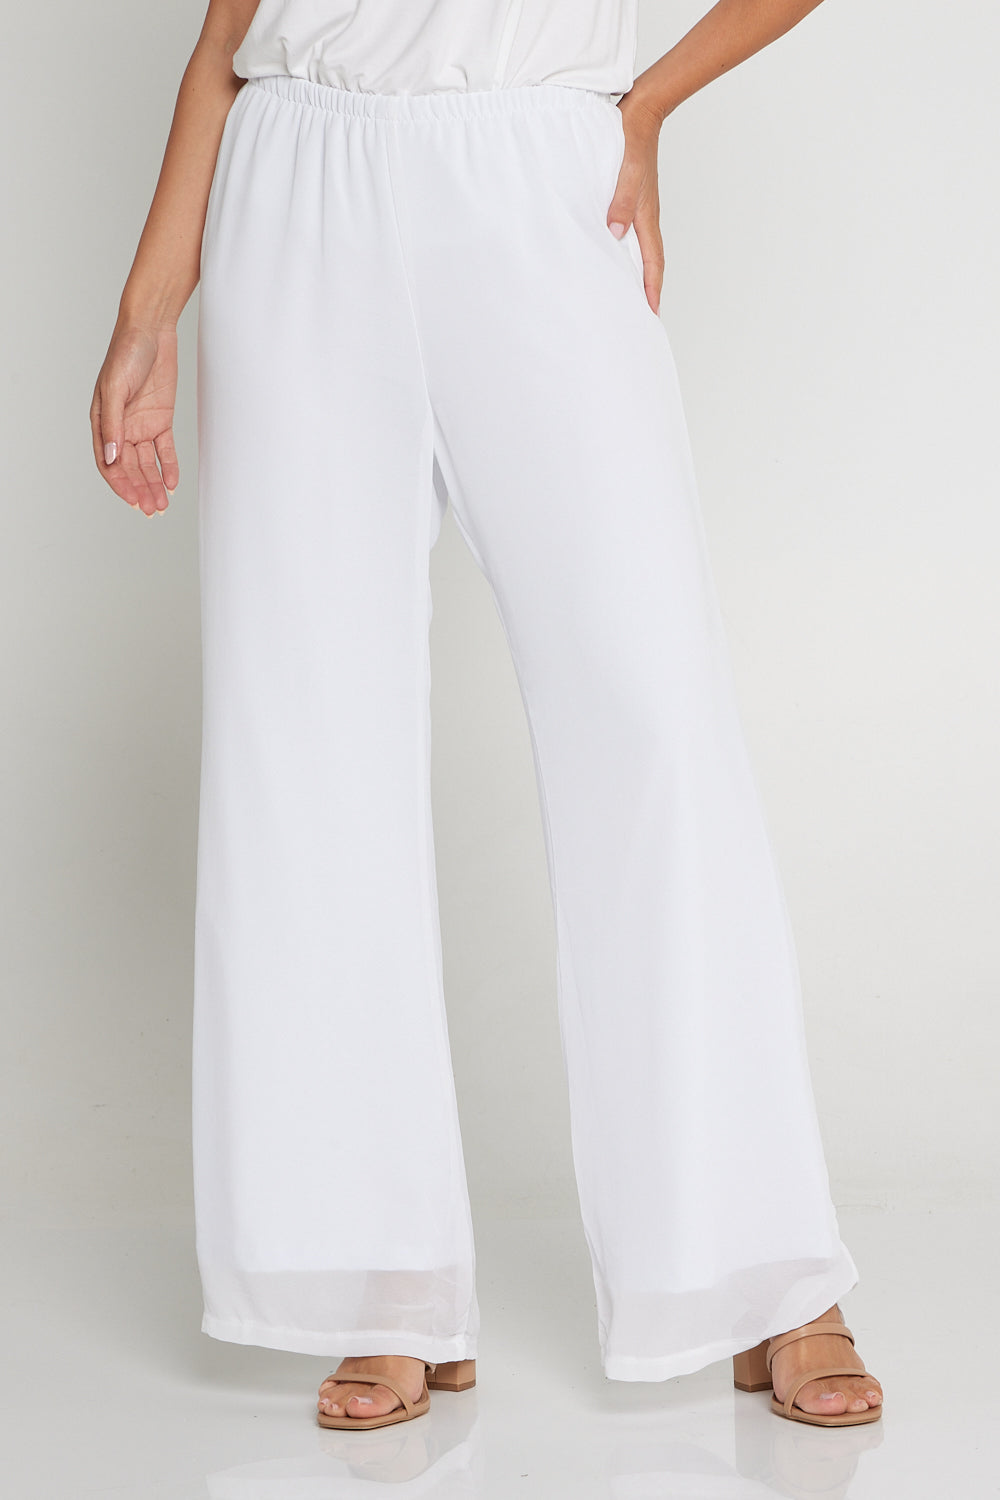 Rendezvous Chiffon Pants - White  Mature Women's Bridal Outfits – TULIO  Fashion